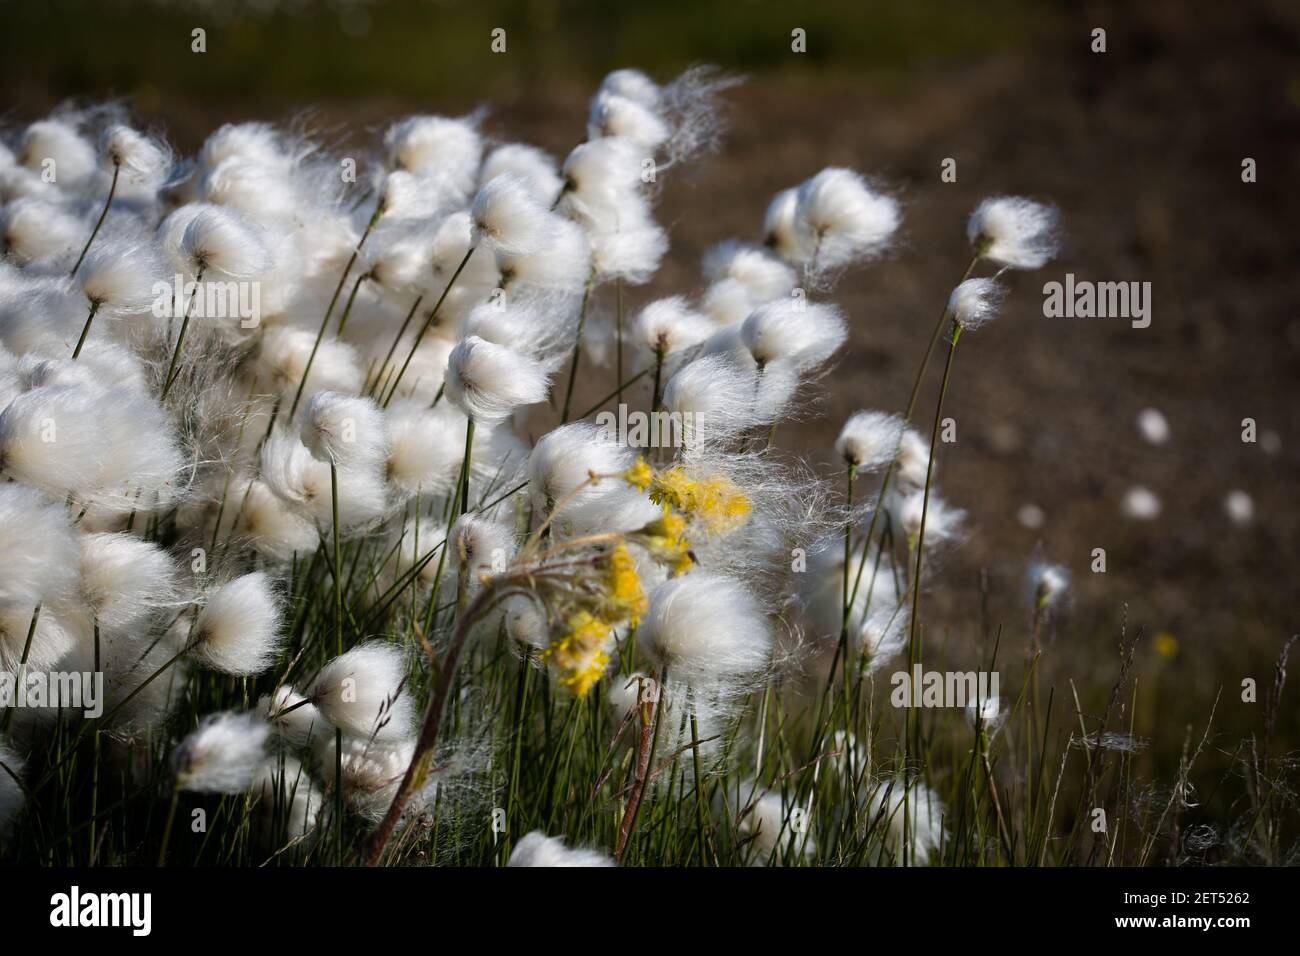 Wild Arctic cotton grass, Eriophorum callitrix, growing in the coastal Inuvialuit hamlet of Tuktoyaktuk, Northwest Territories, Canada. Stock Photo